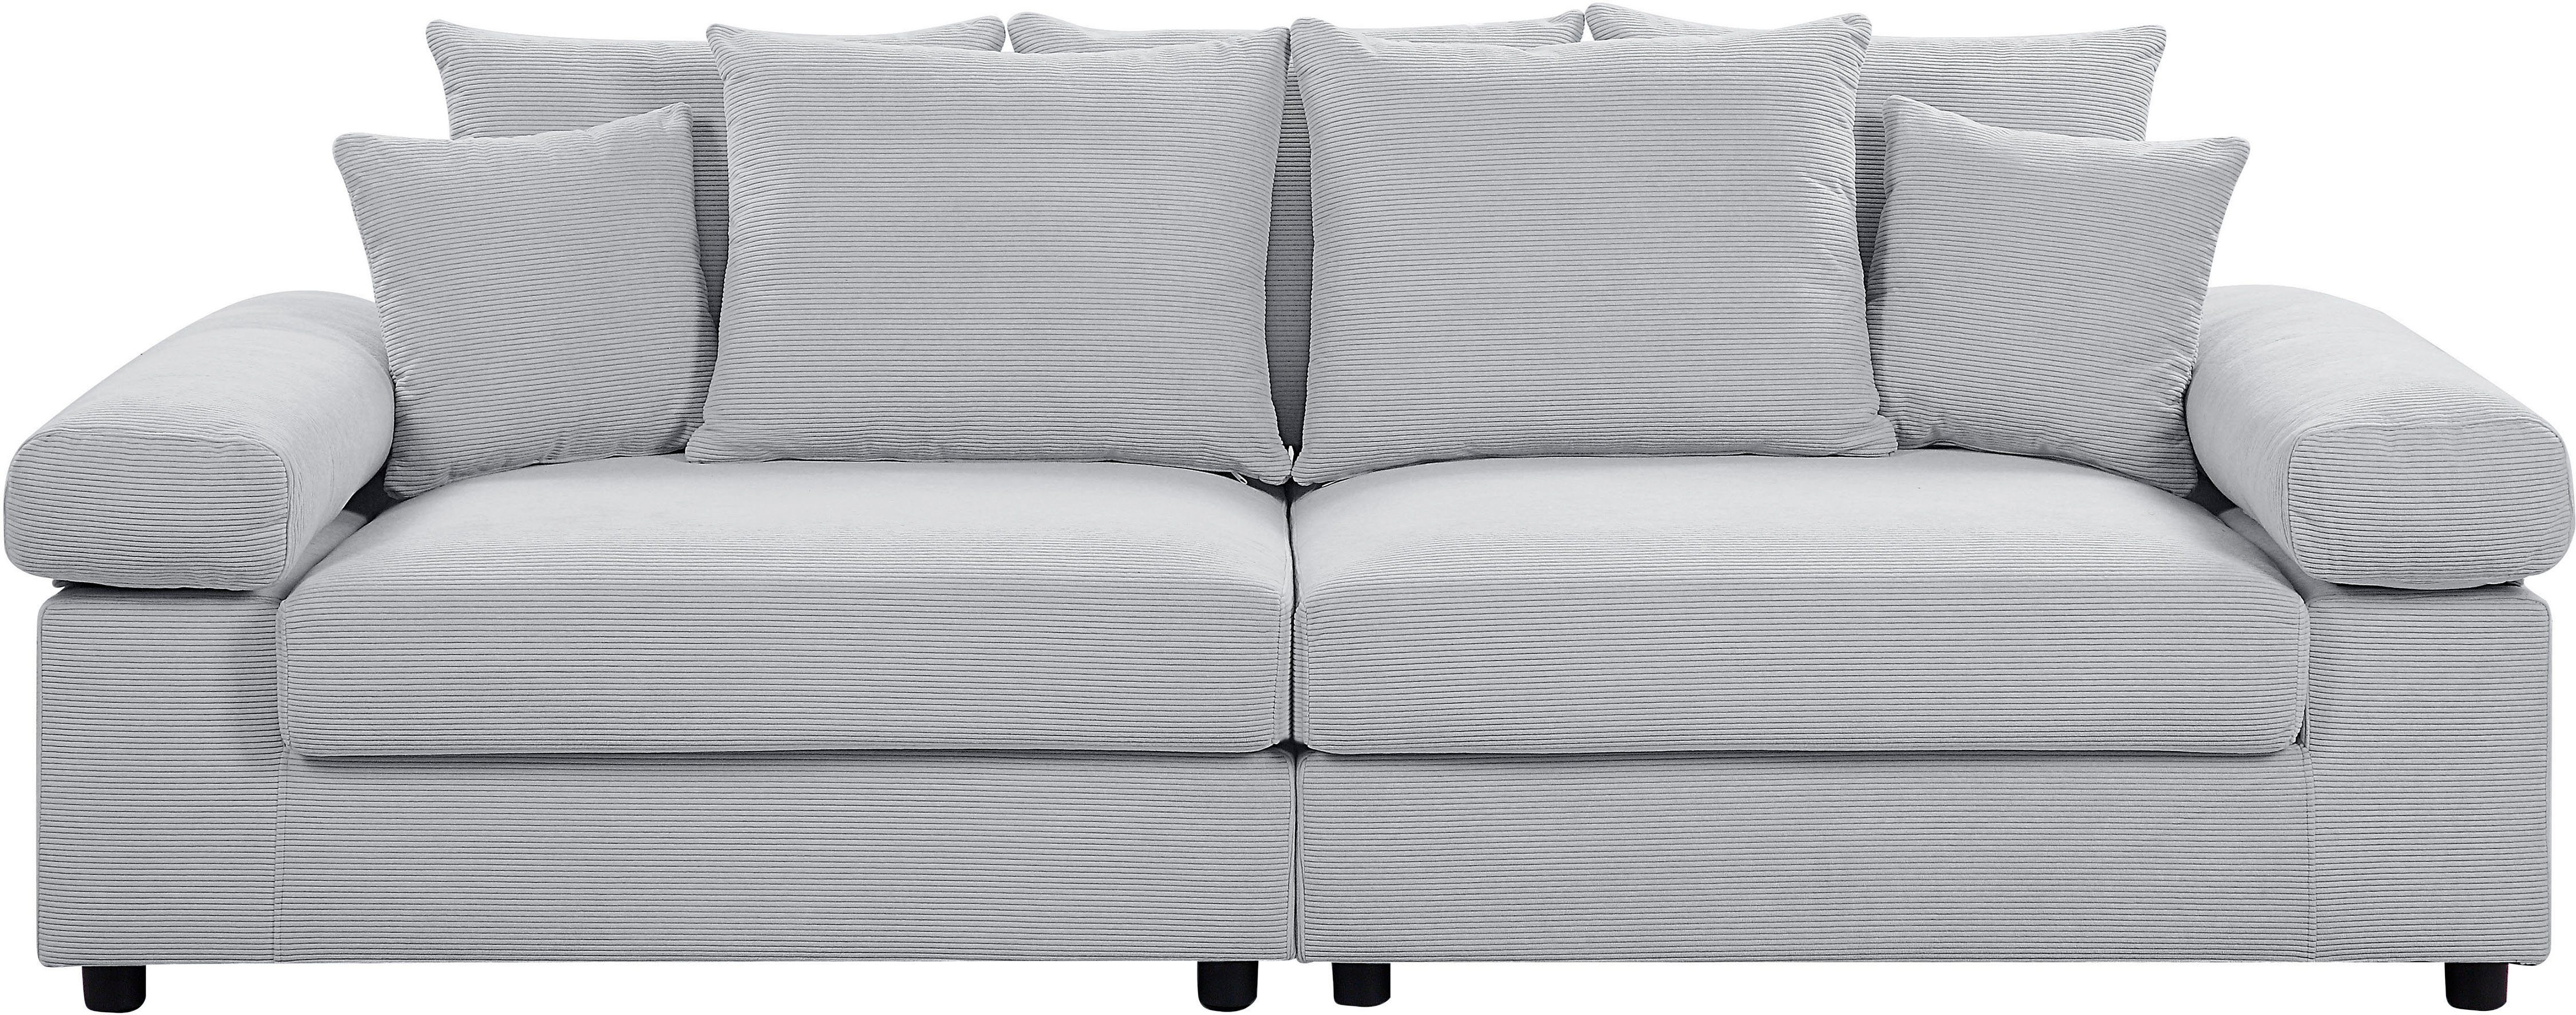 Big-Sofa mit ATLANTIC mit Bjoern, grau Federkern, im frei collection stellbar home Cord-Bezug, XXL-Sitzfläche, Raum